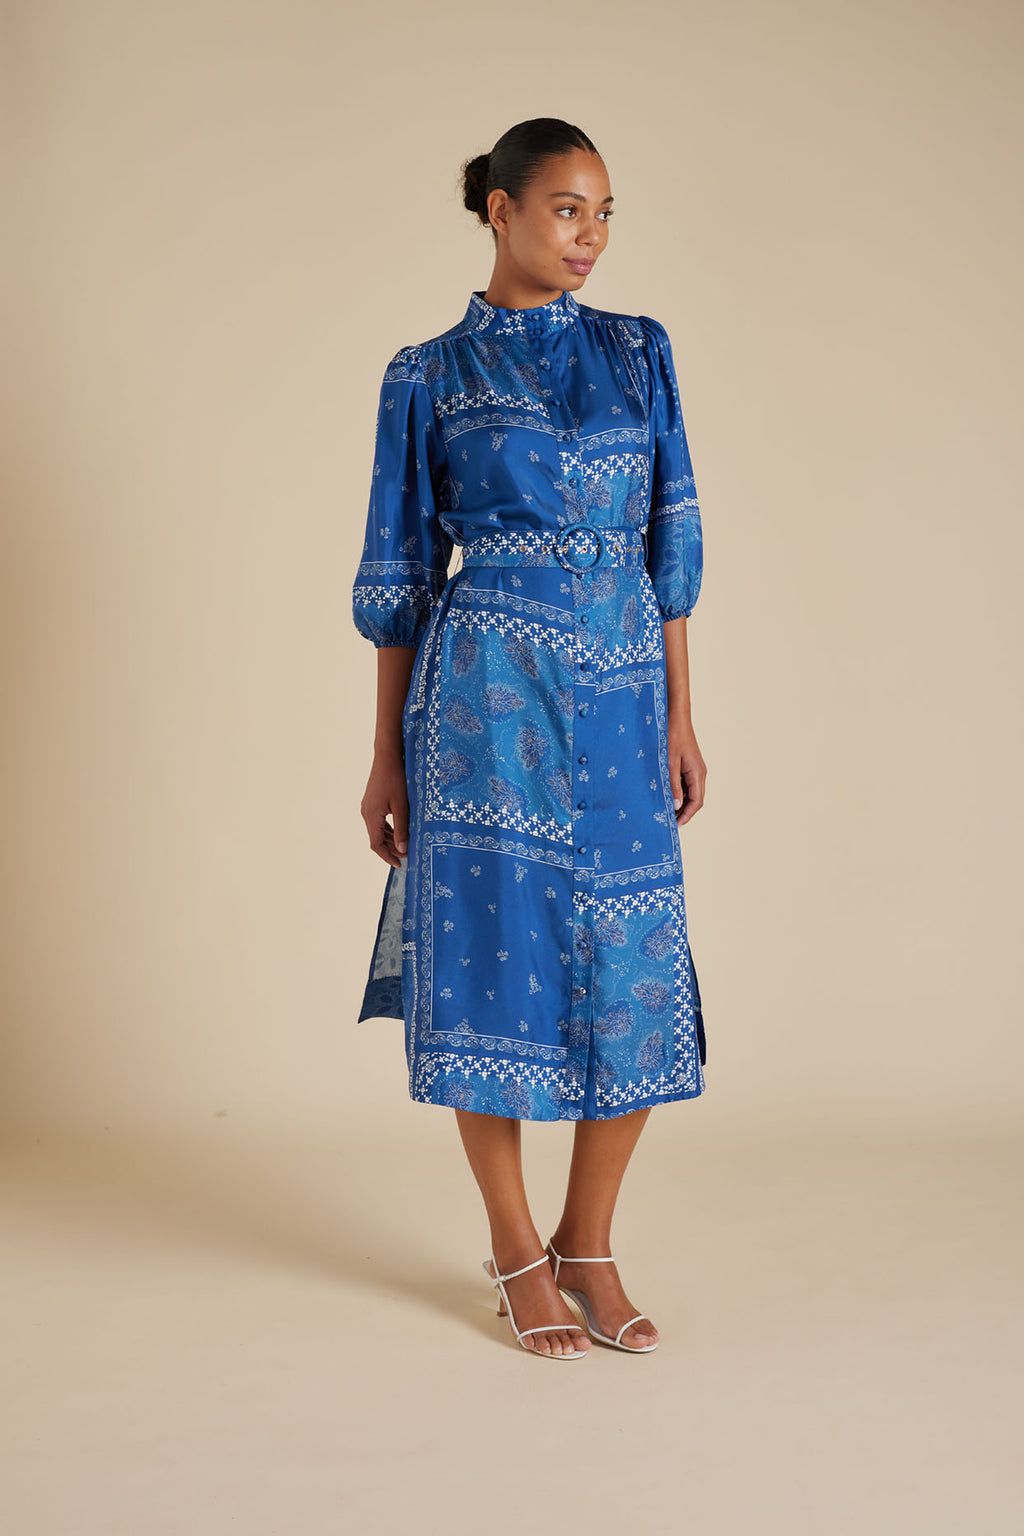 Alessandra Lyon Silk Twill Dress in Navy Blue